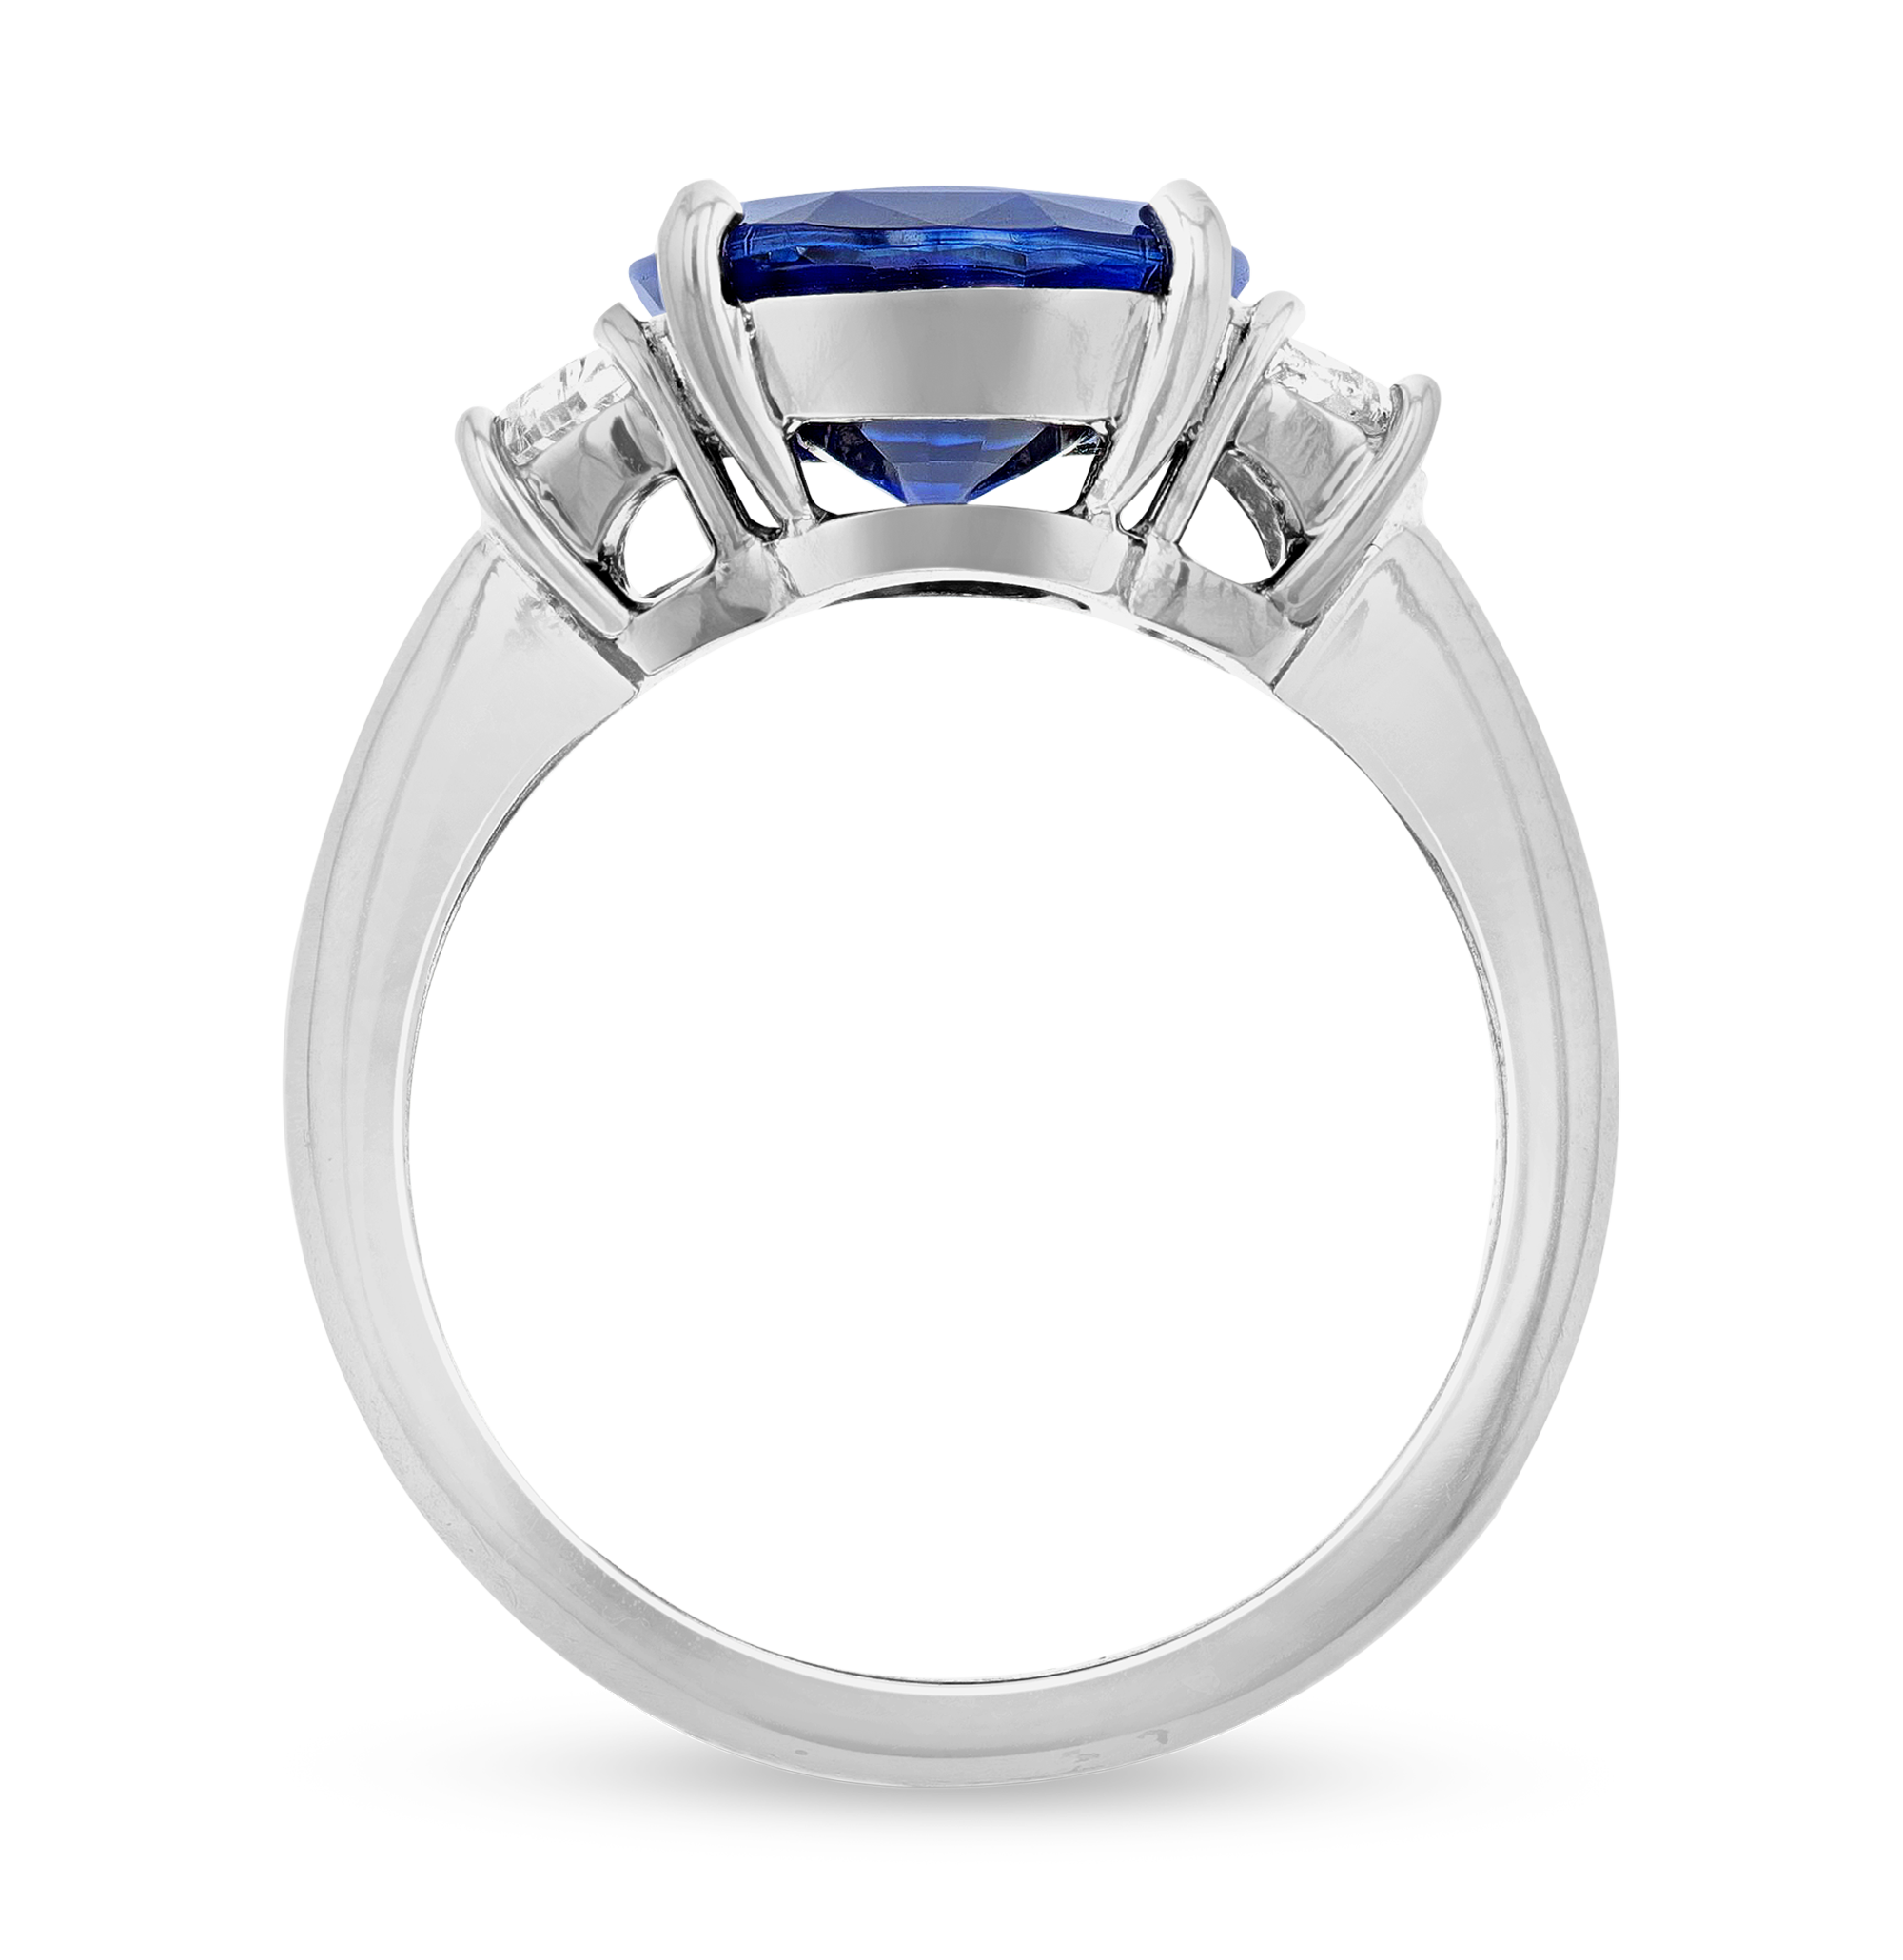 Ceylon Sapphire and Diamond Ring, 5.05 Carats